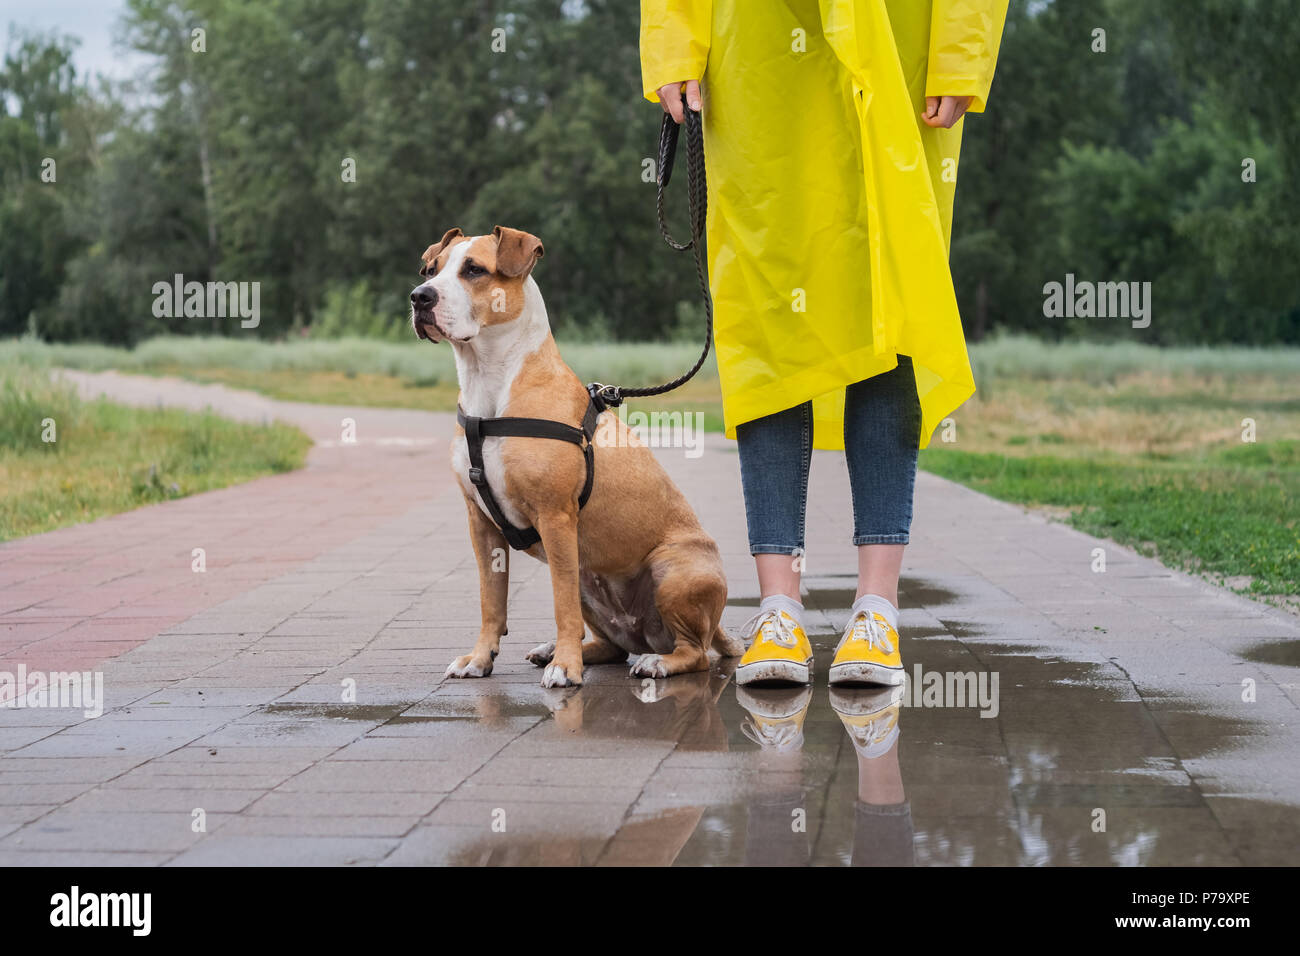 Walking the dog in yellow raincoat on rainy day. Stock Photo